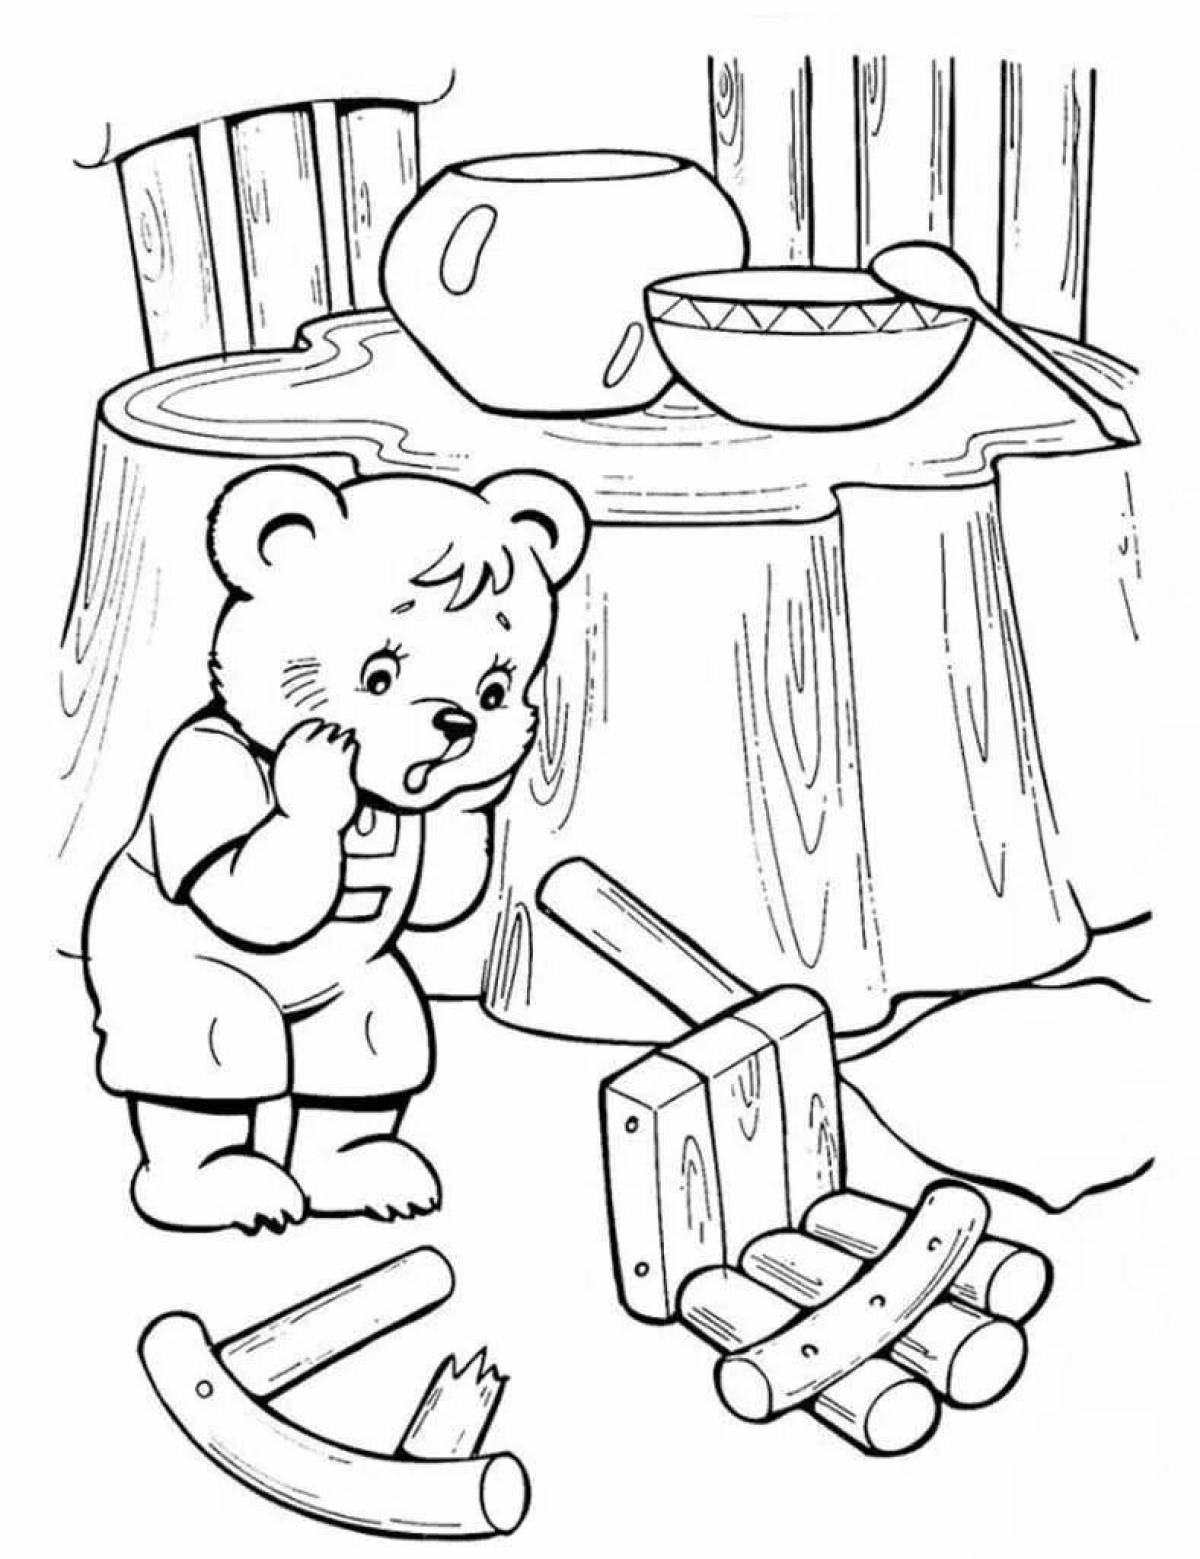 Adorable three bears coloring book